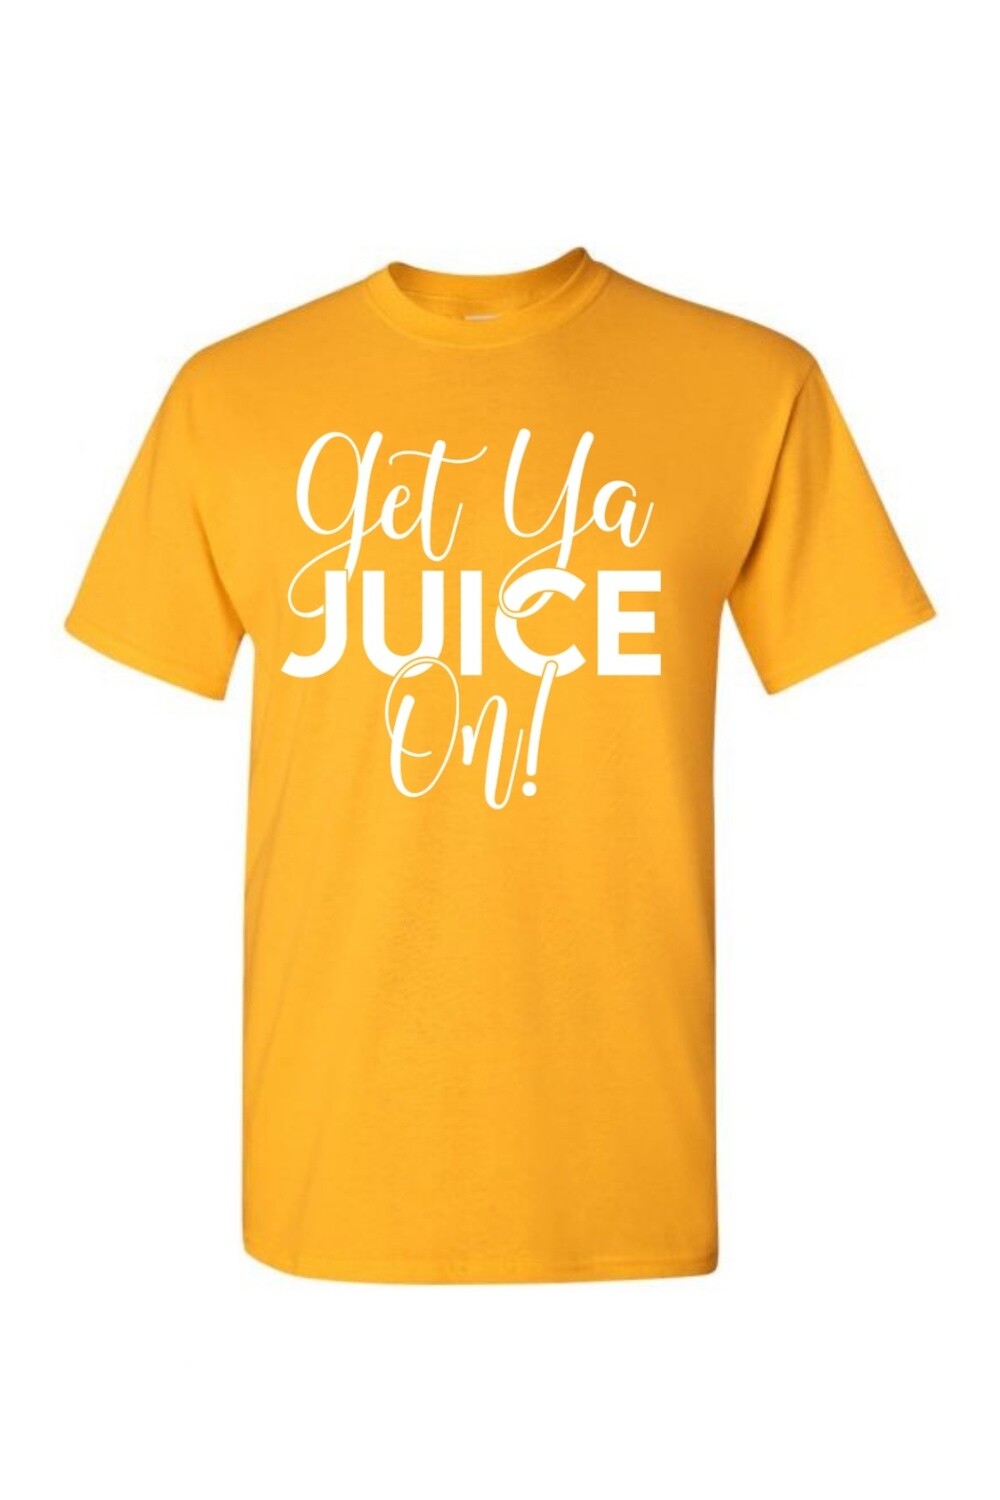 Get Ya Juice On Yellow T-shirt